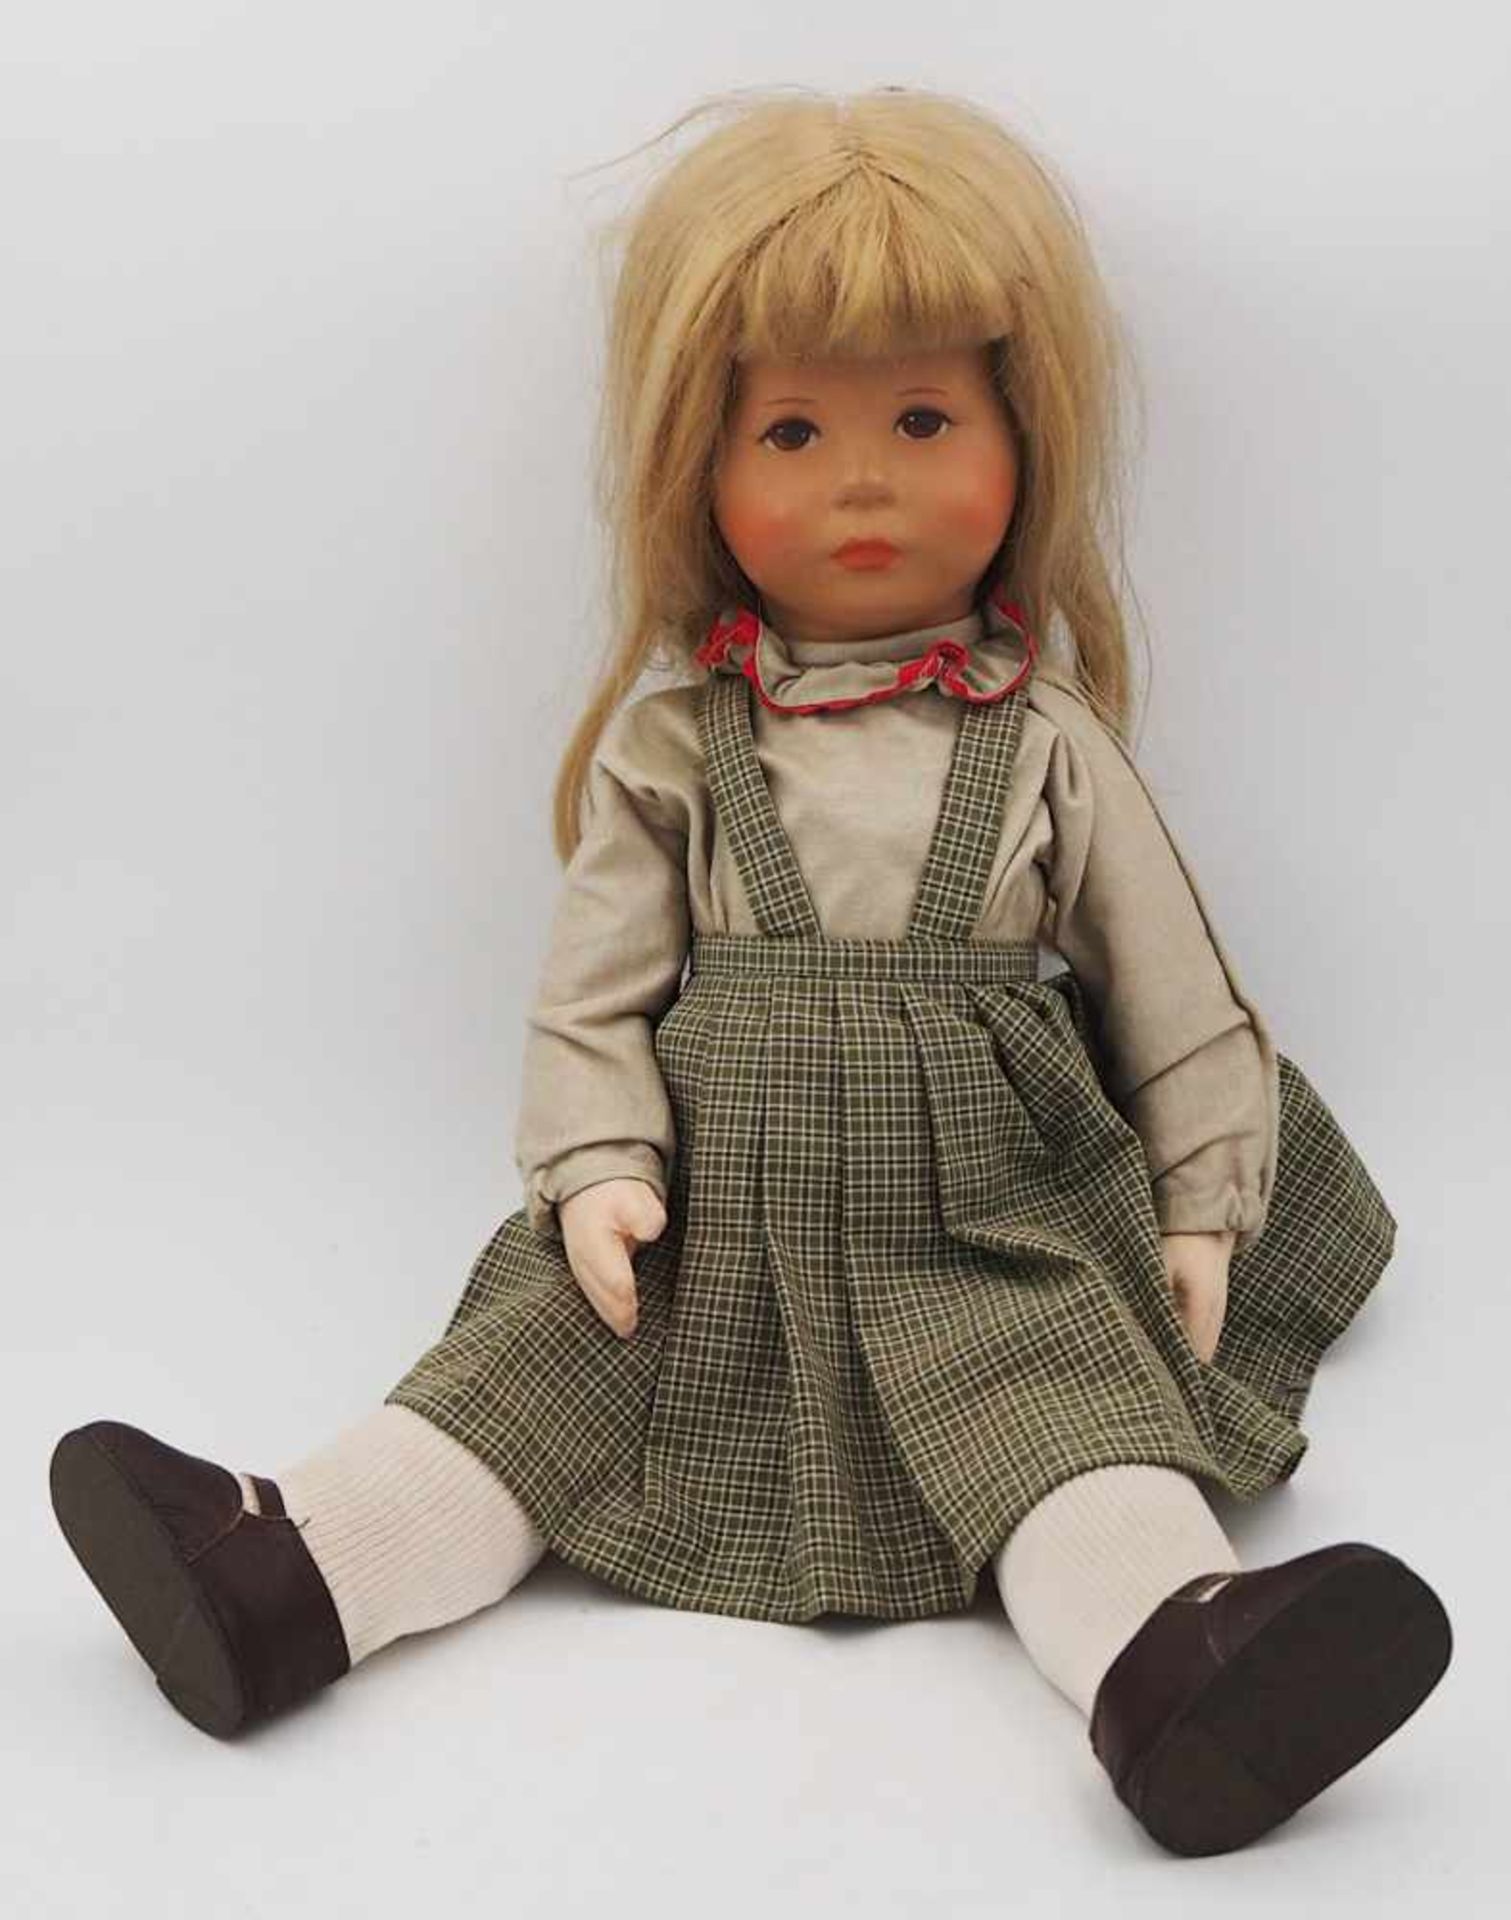 1 Puppe KÄTHE KRUSE wohl 1960er/1970er Jahreblonde Perücke bekleidet h ca. 45cm ber.